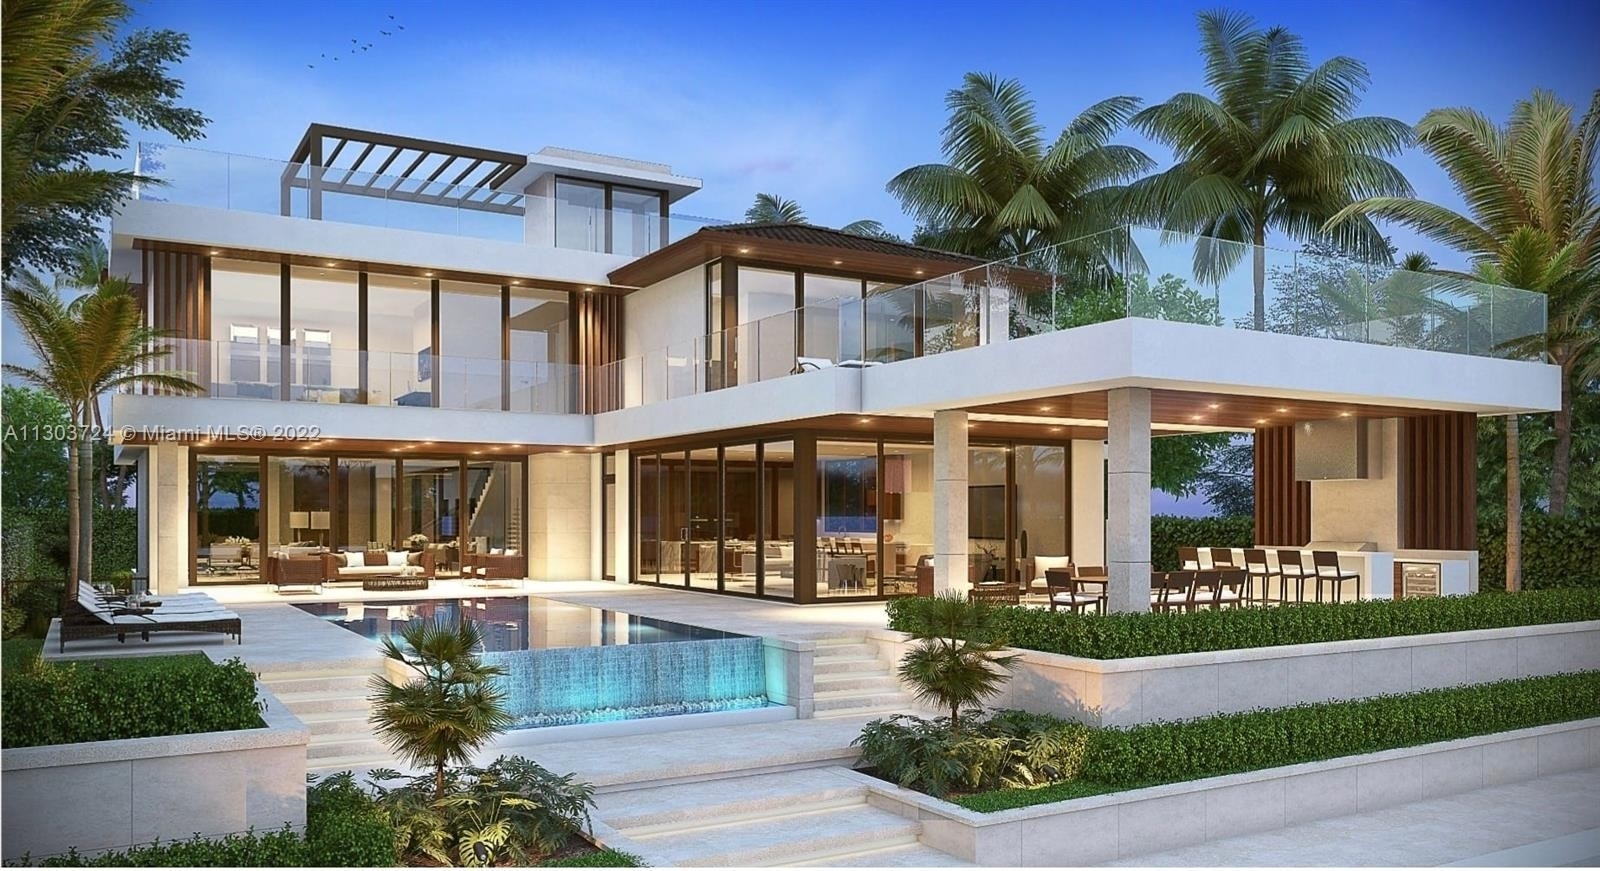 Property at Biscayne Point, Miami Beach, FL 33141